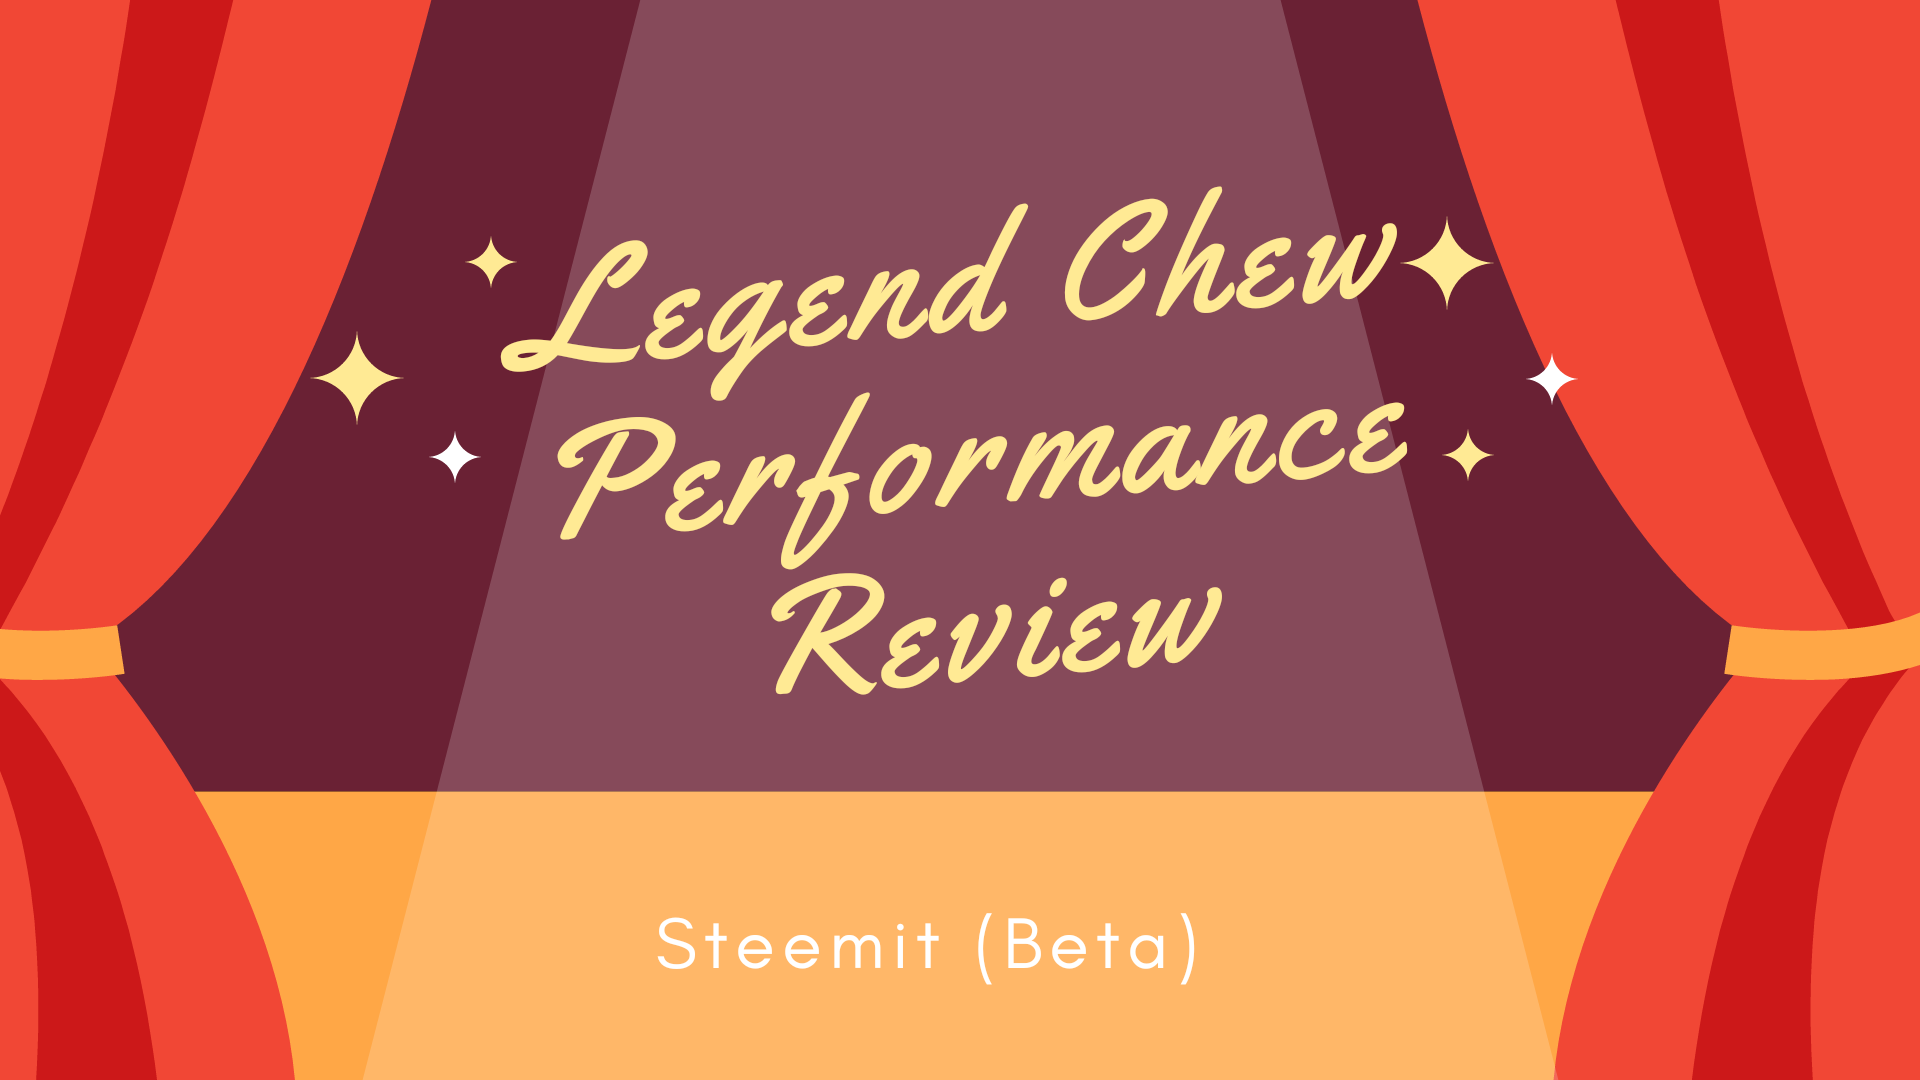 legendchew_Performance_Review.png